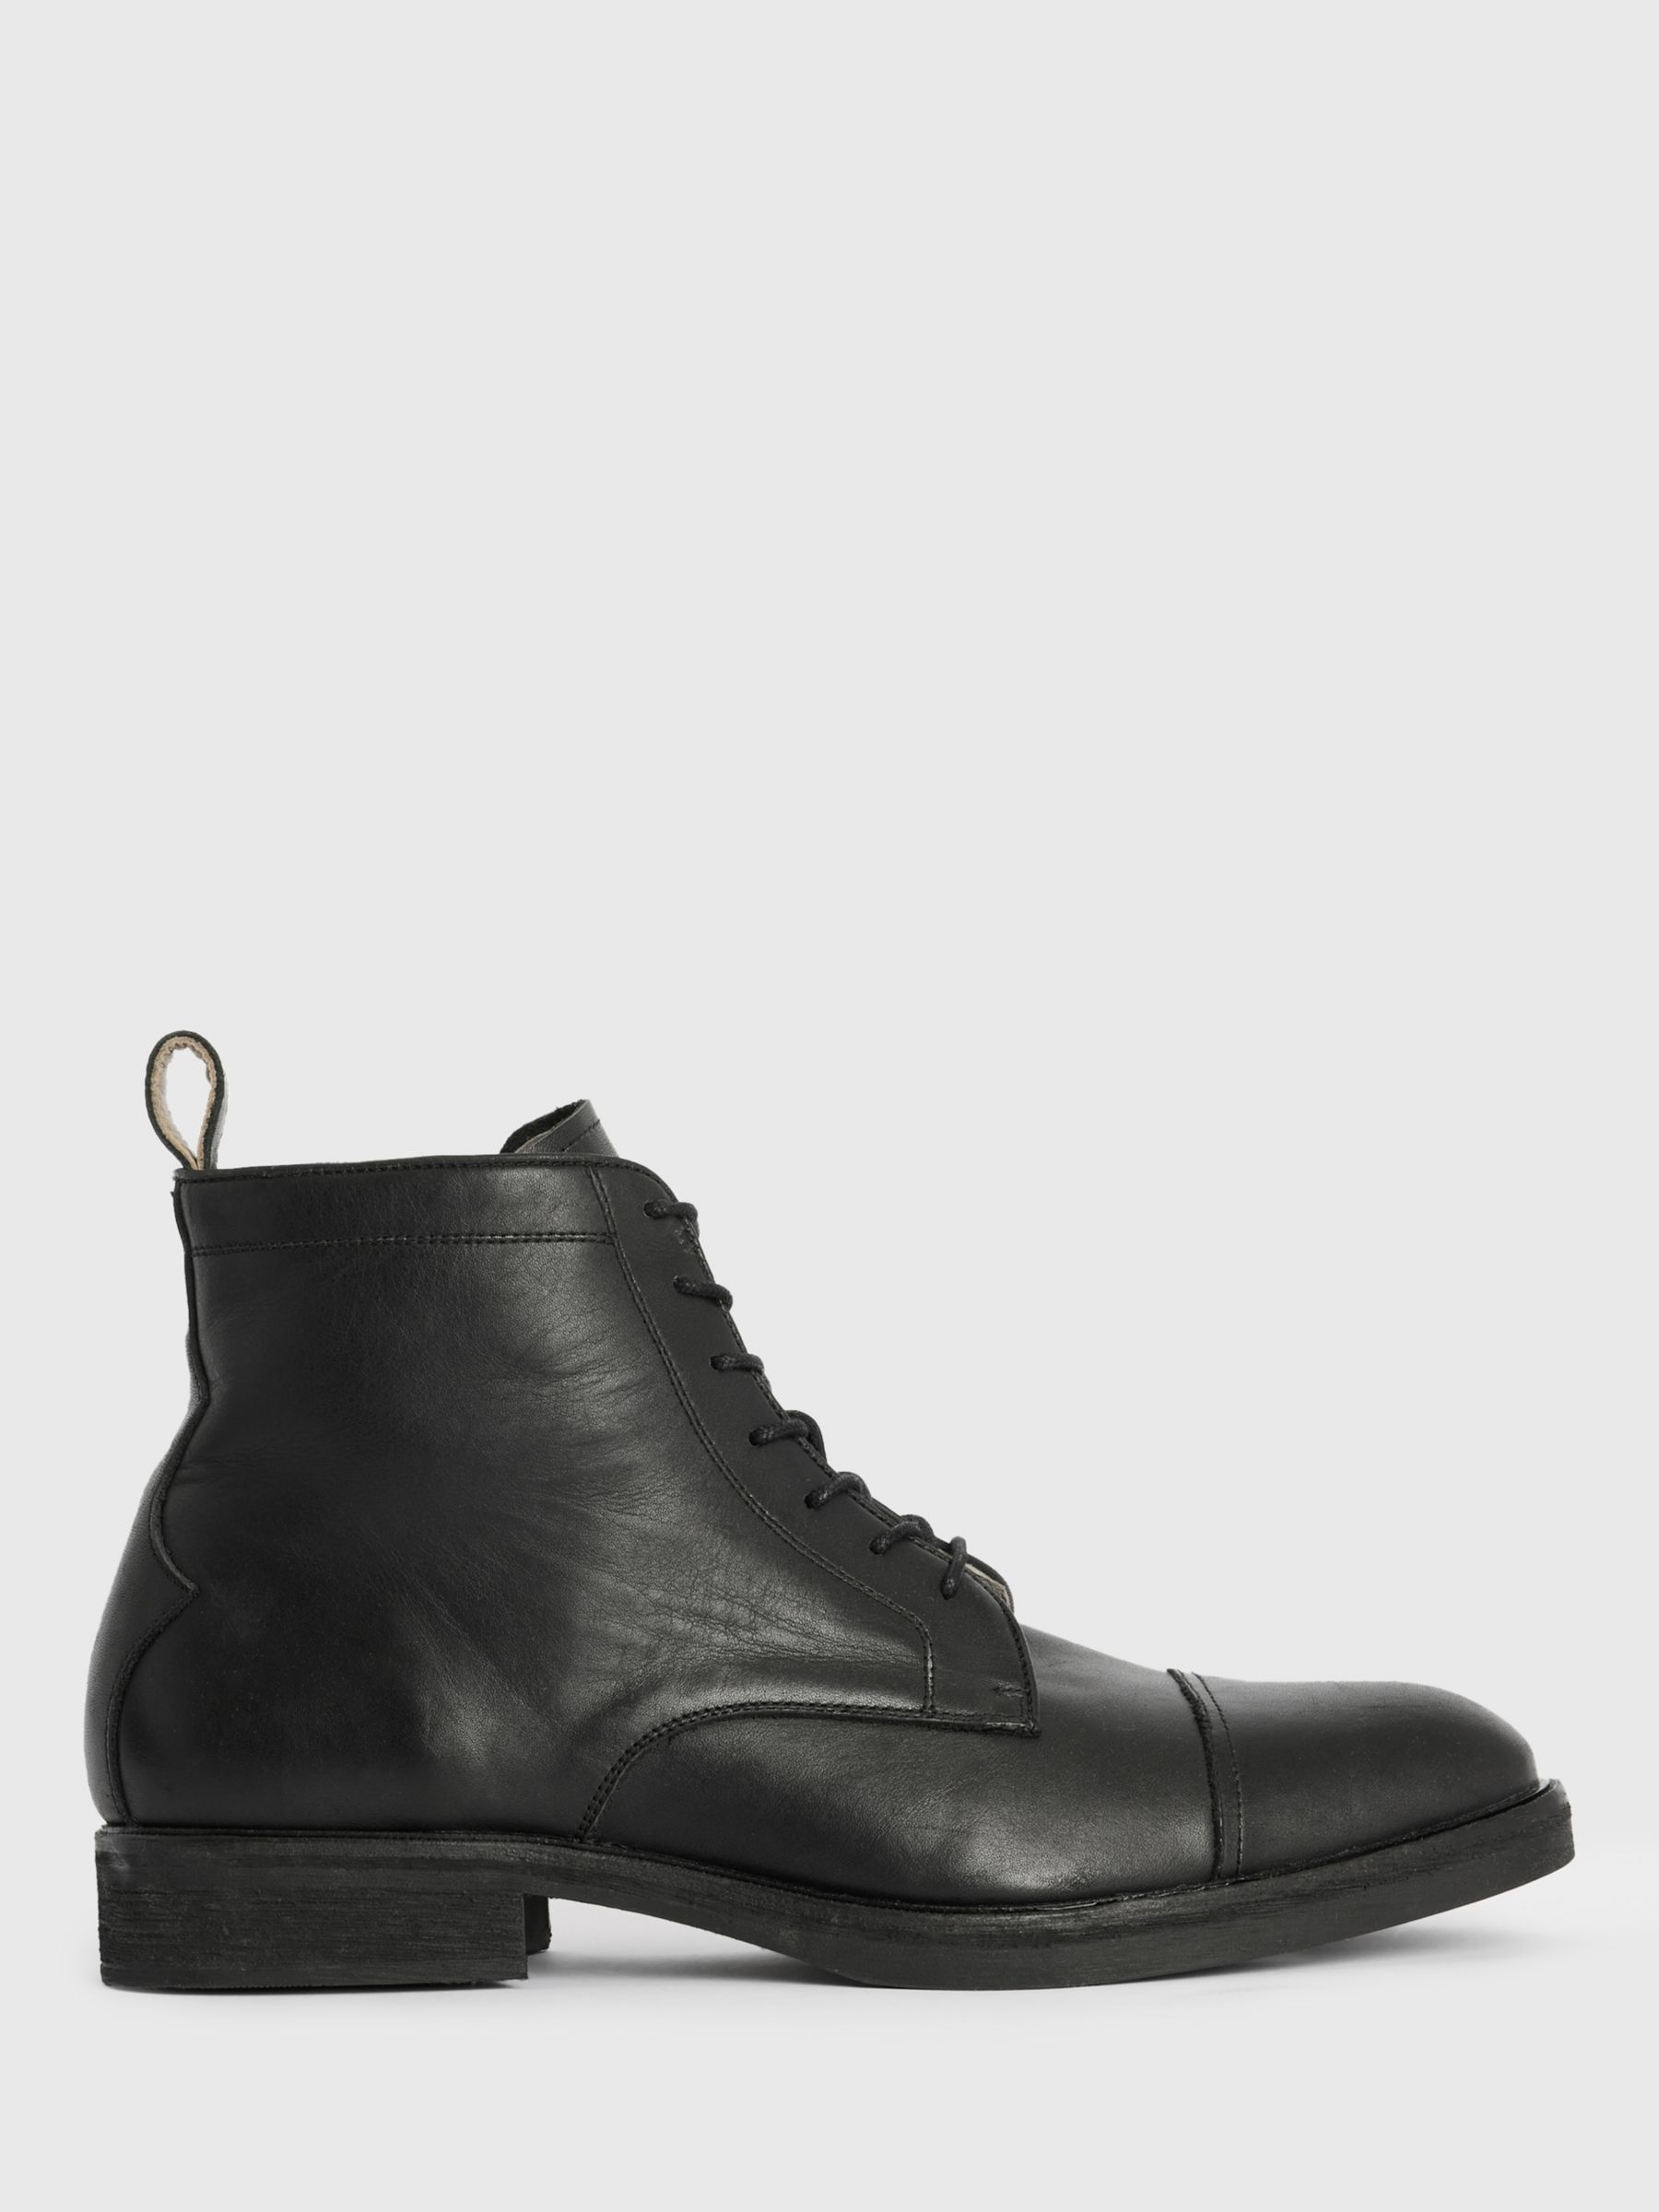 AllSaints Drago Leather Lace-Up Boots, Black, 10